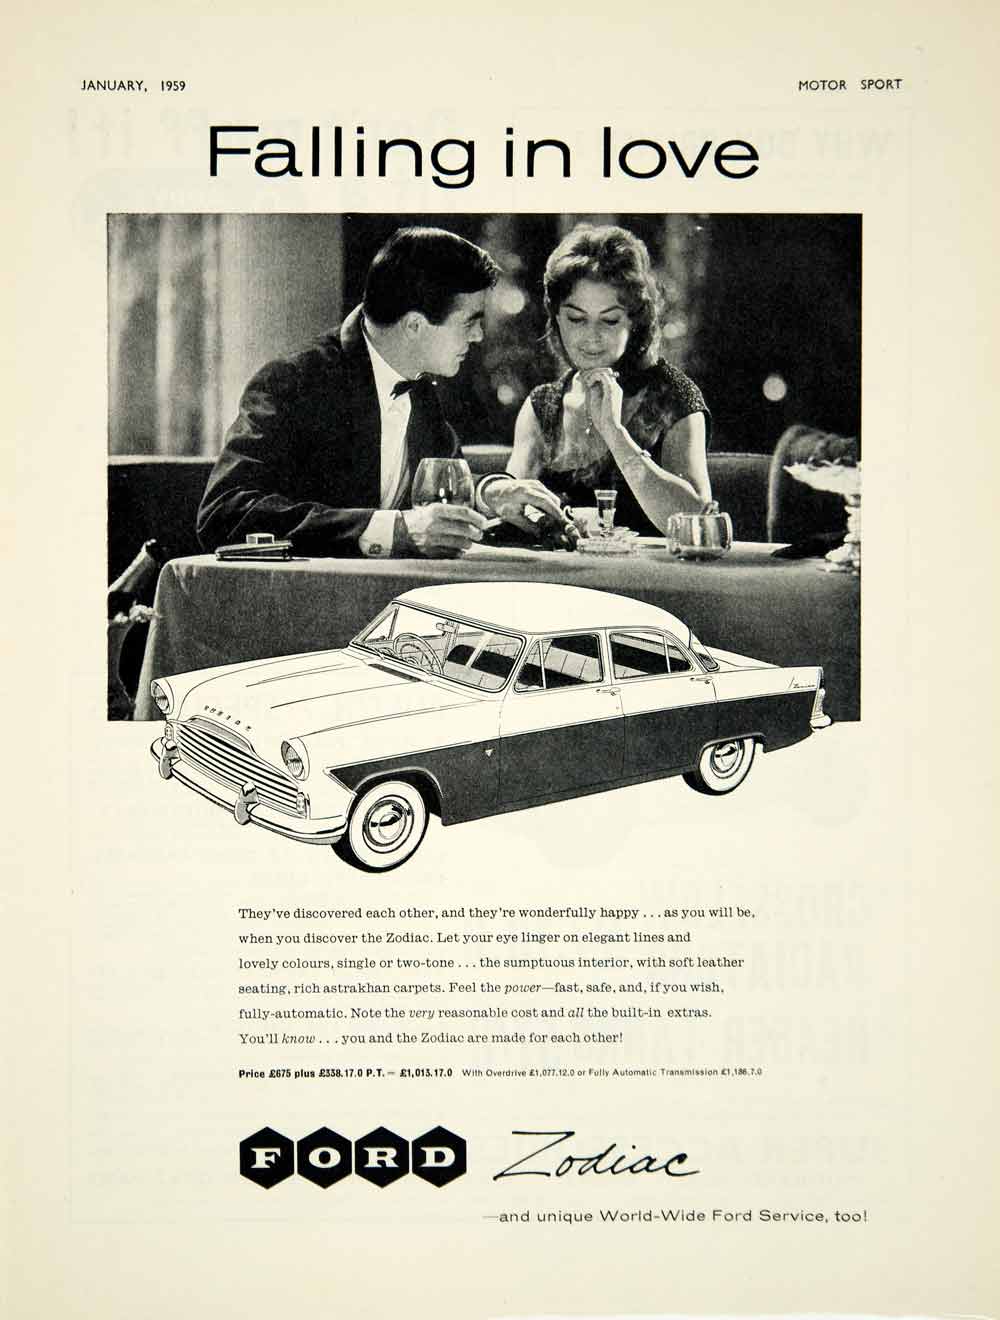 1959 Ad Ford Zodiac Mark II 206E Saloon Car Classic Auto Lovers Romance YMT2